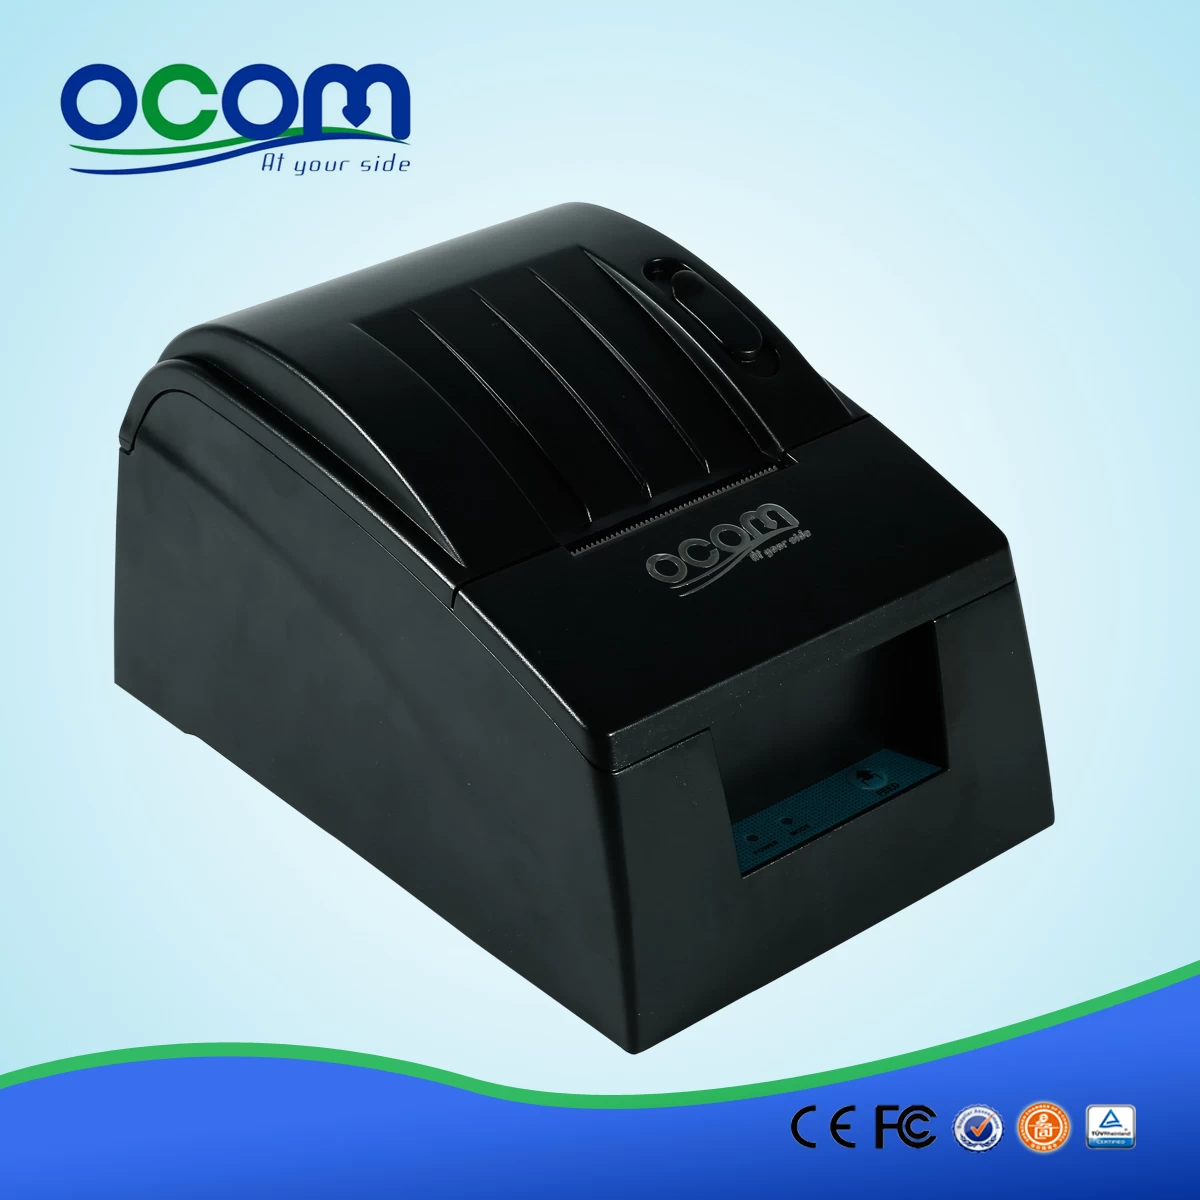 58mm Pos Thermal Receipt Printer Price (OCPP-586)